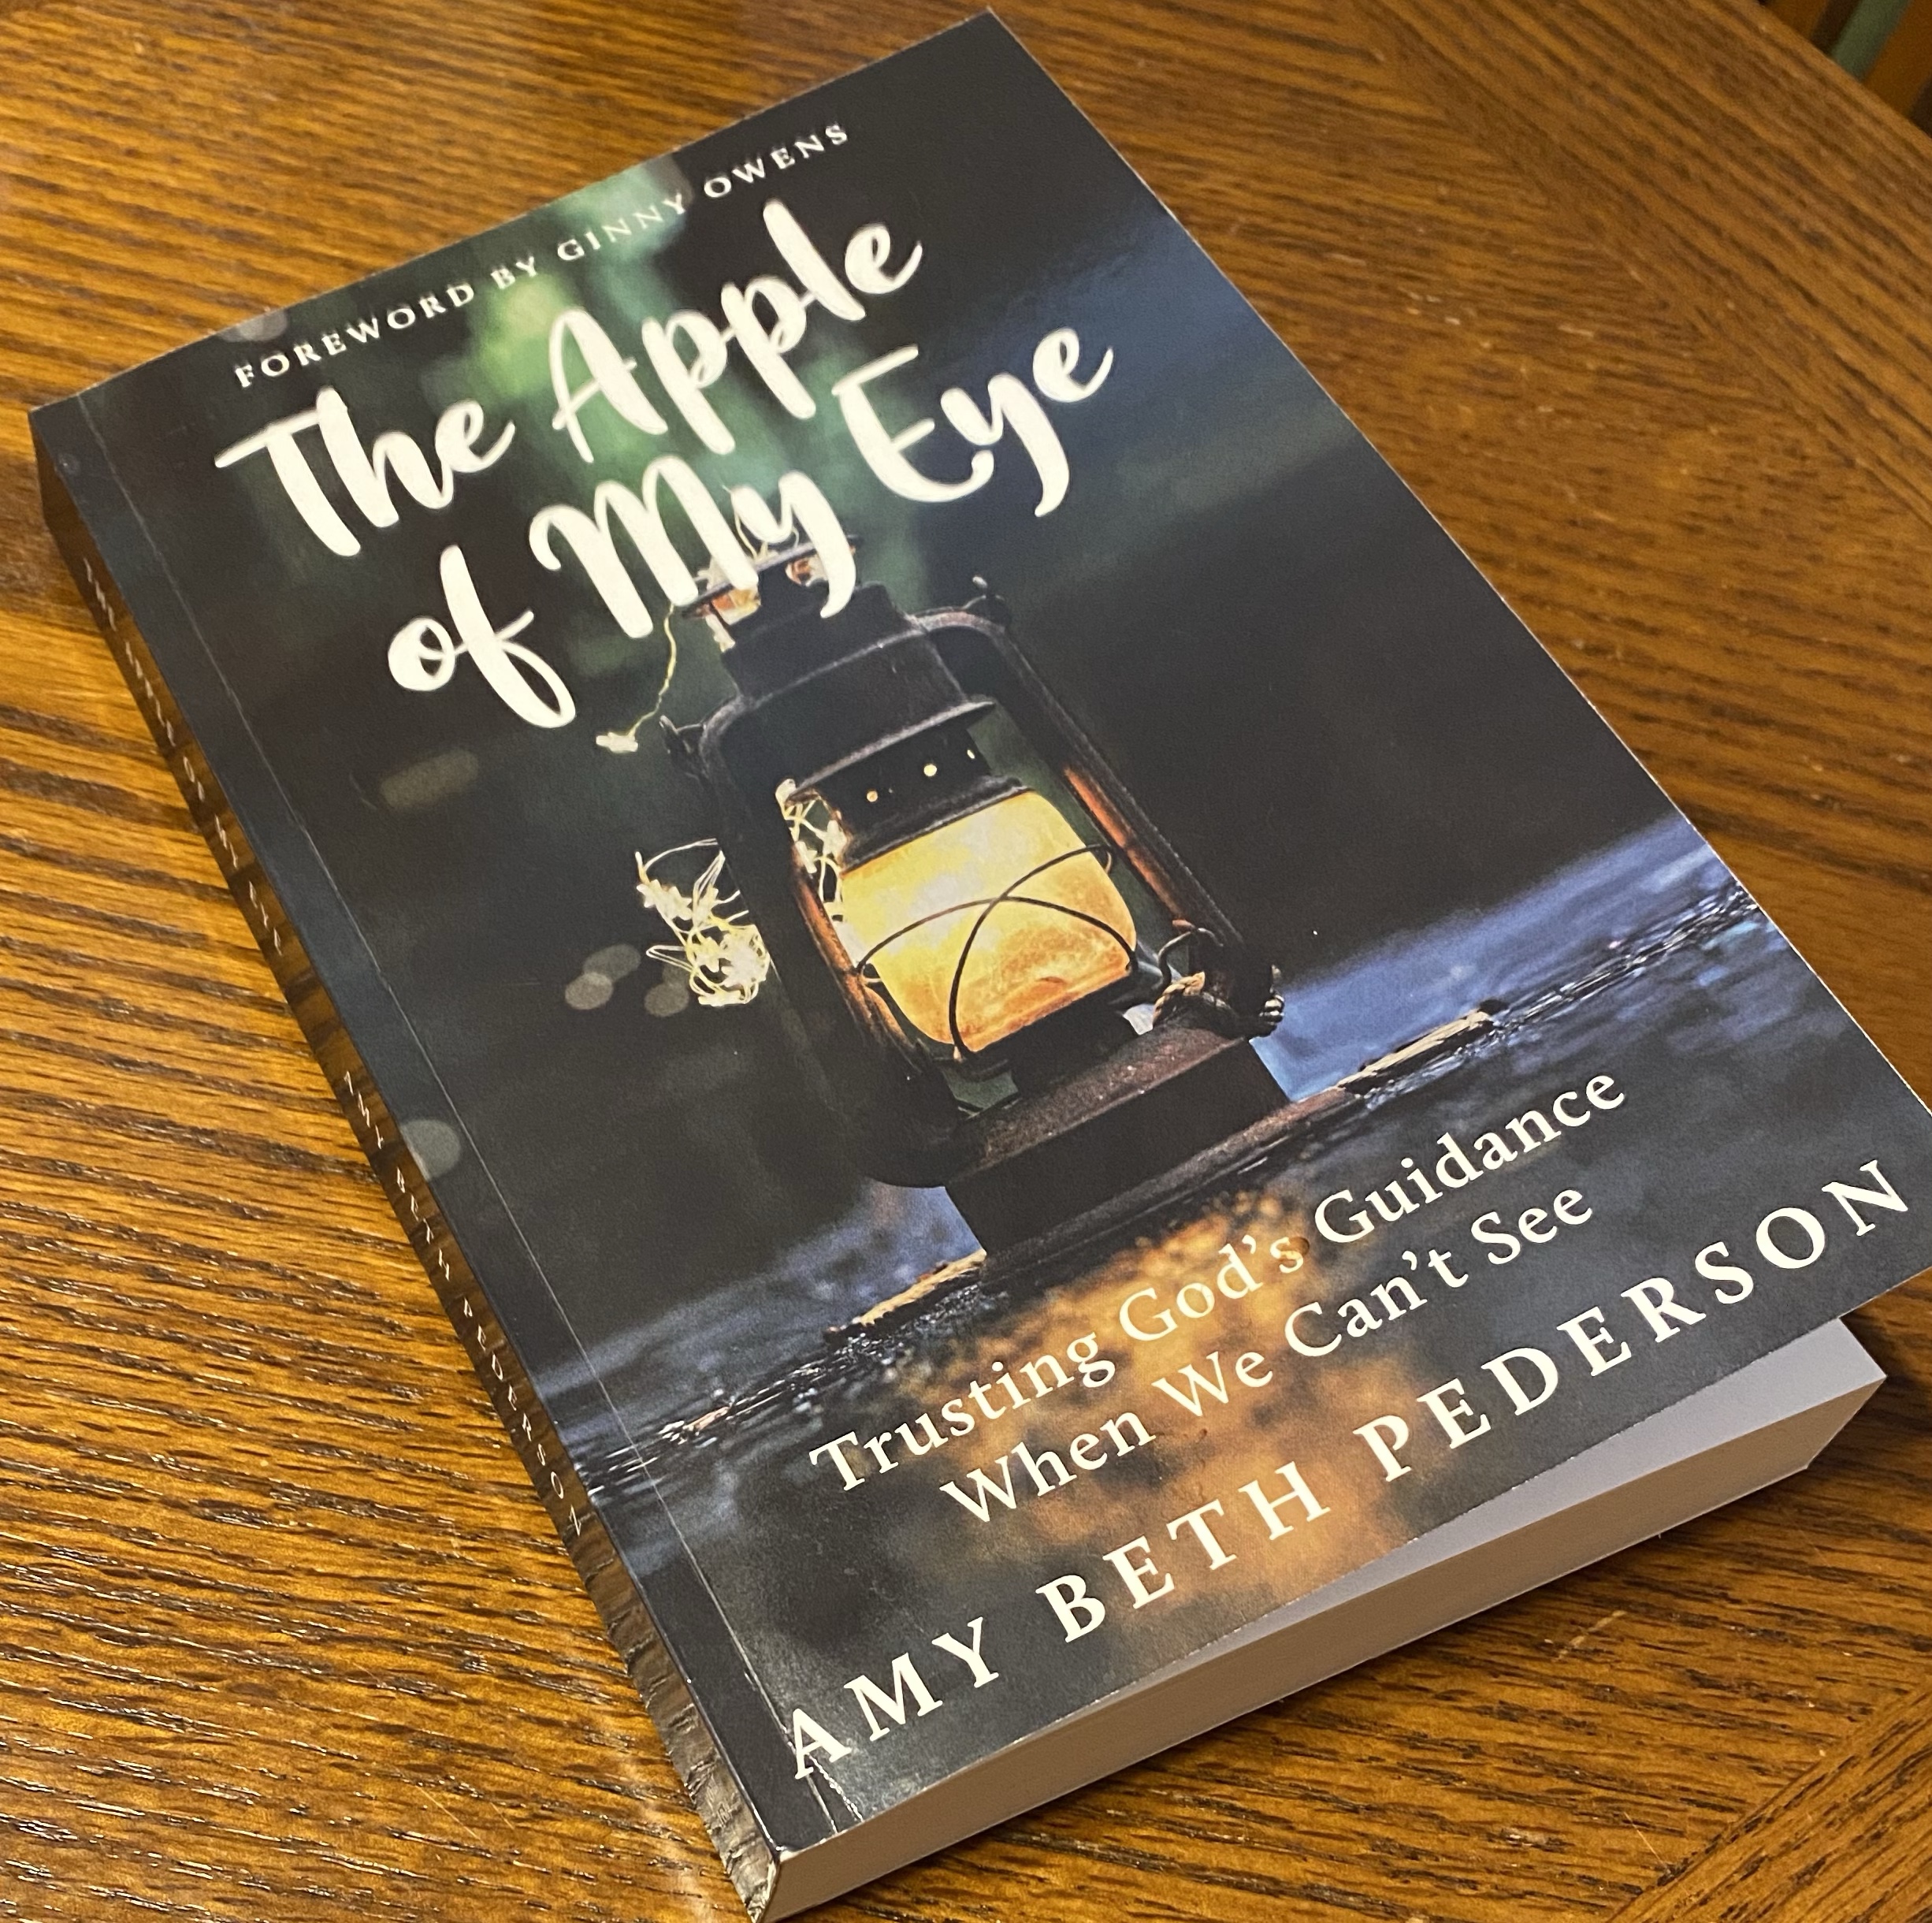 The Apple of My Eye by Amy Beth Petersen